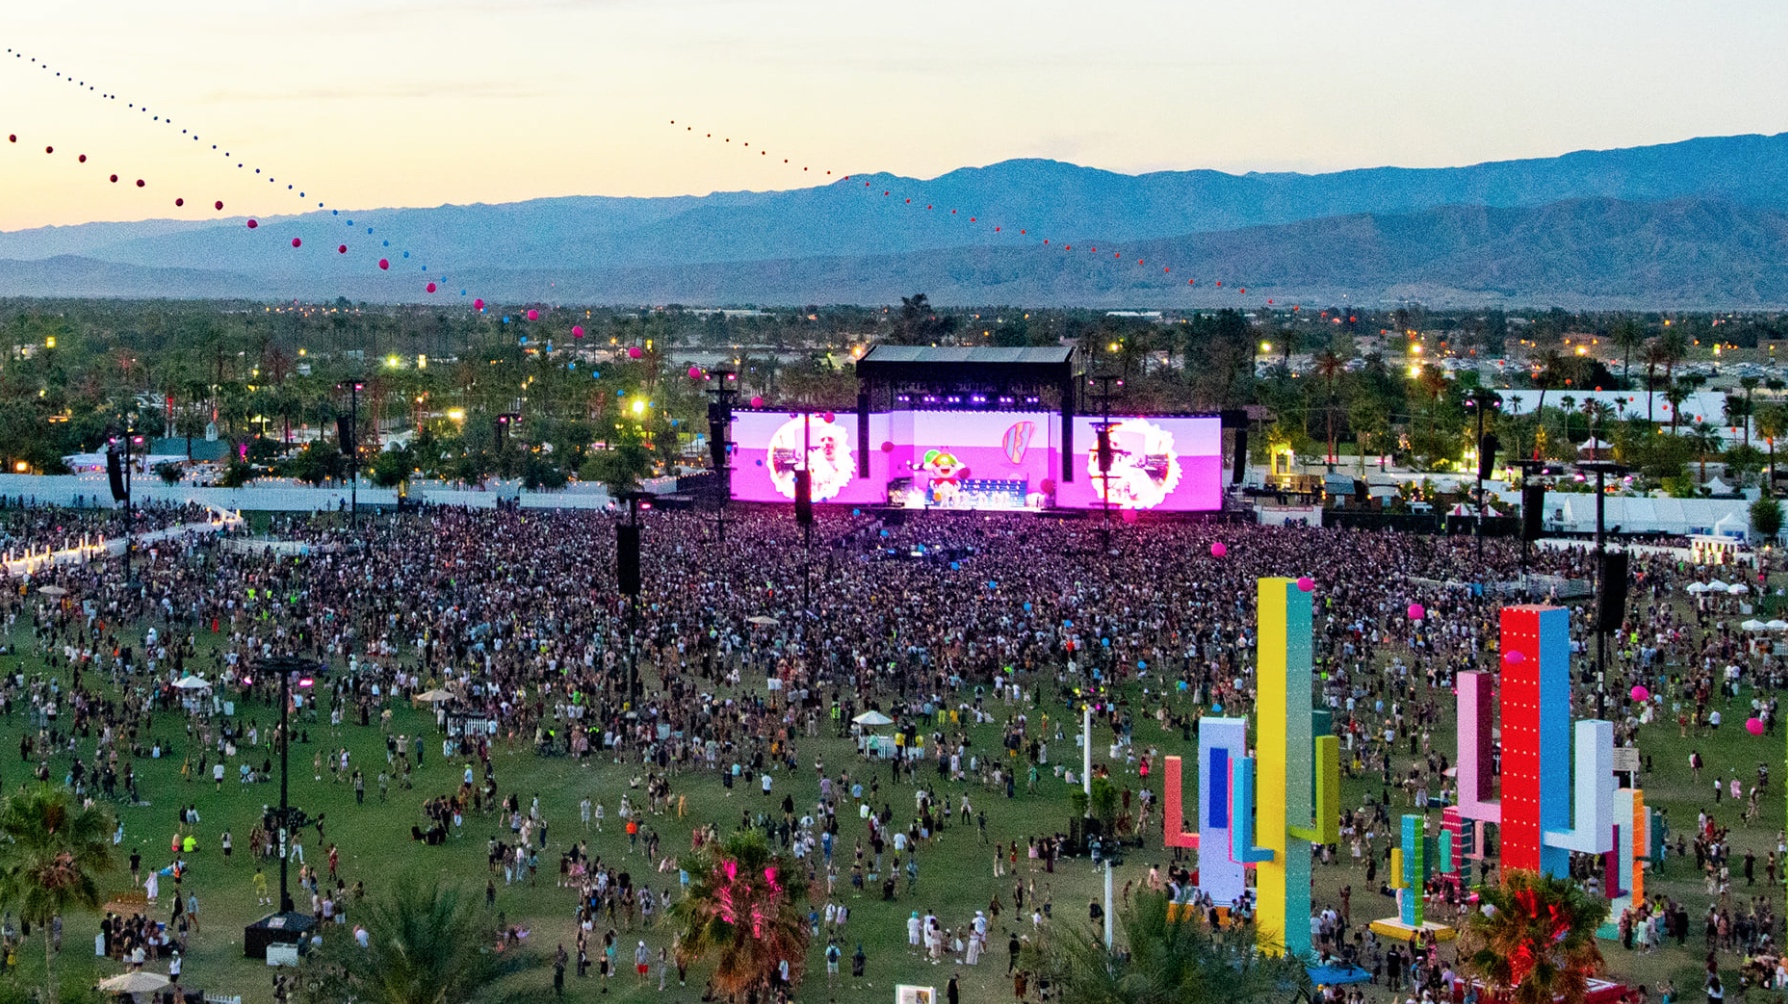 Festival News: Coachella Returns April 15-17 & 22-24, 2022 – Lineup Released